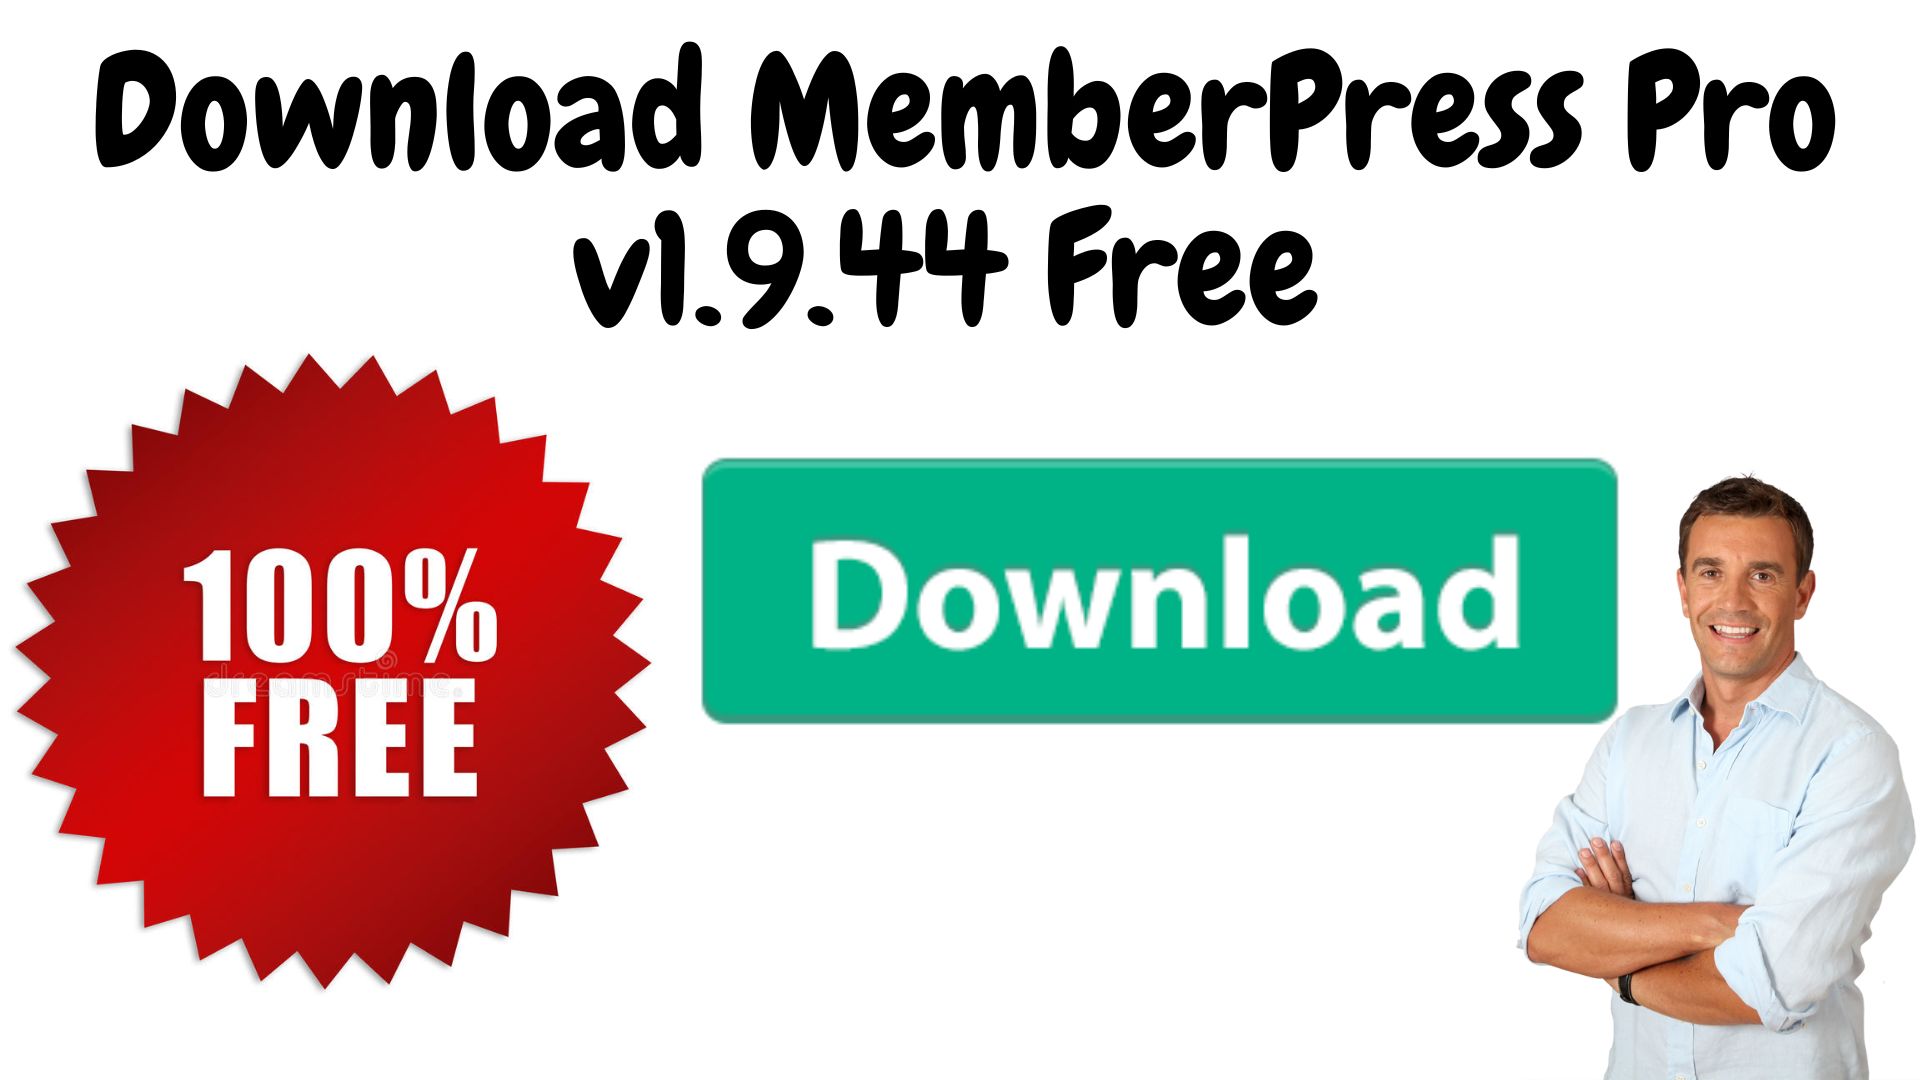 Download Memberpress Pro V1.9.44 Free 